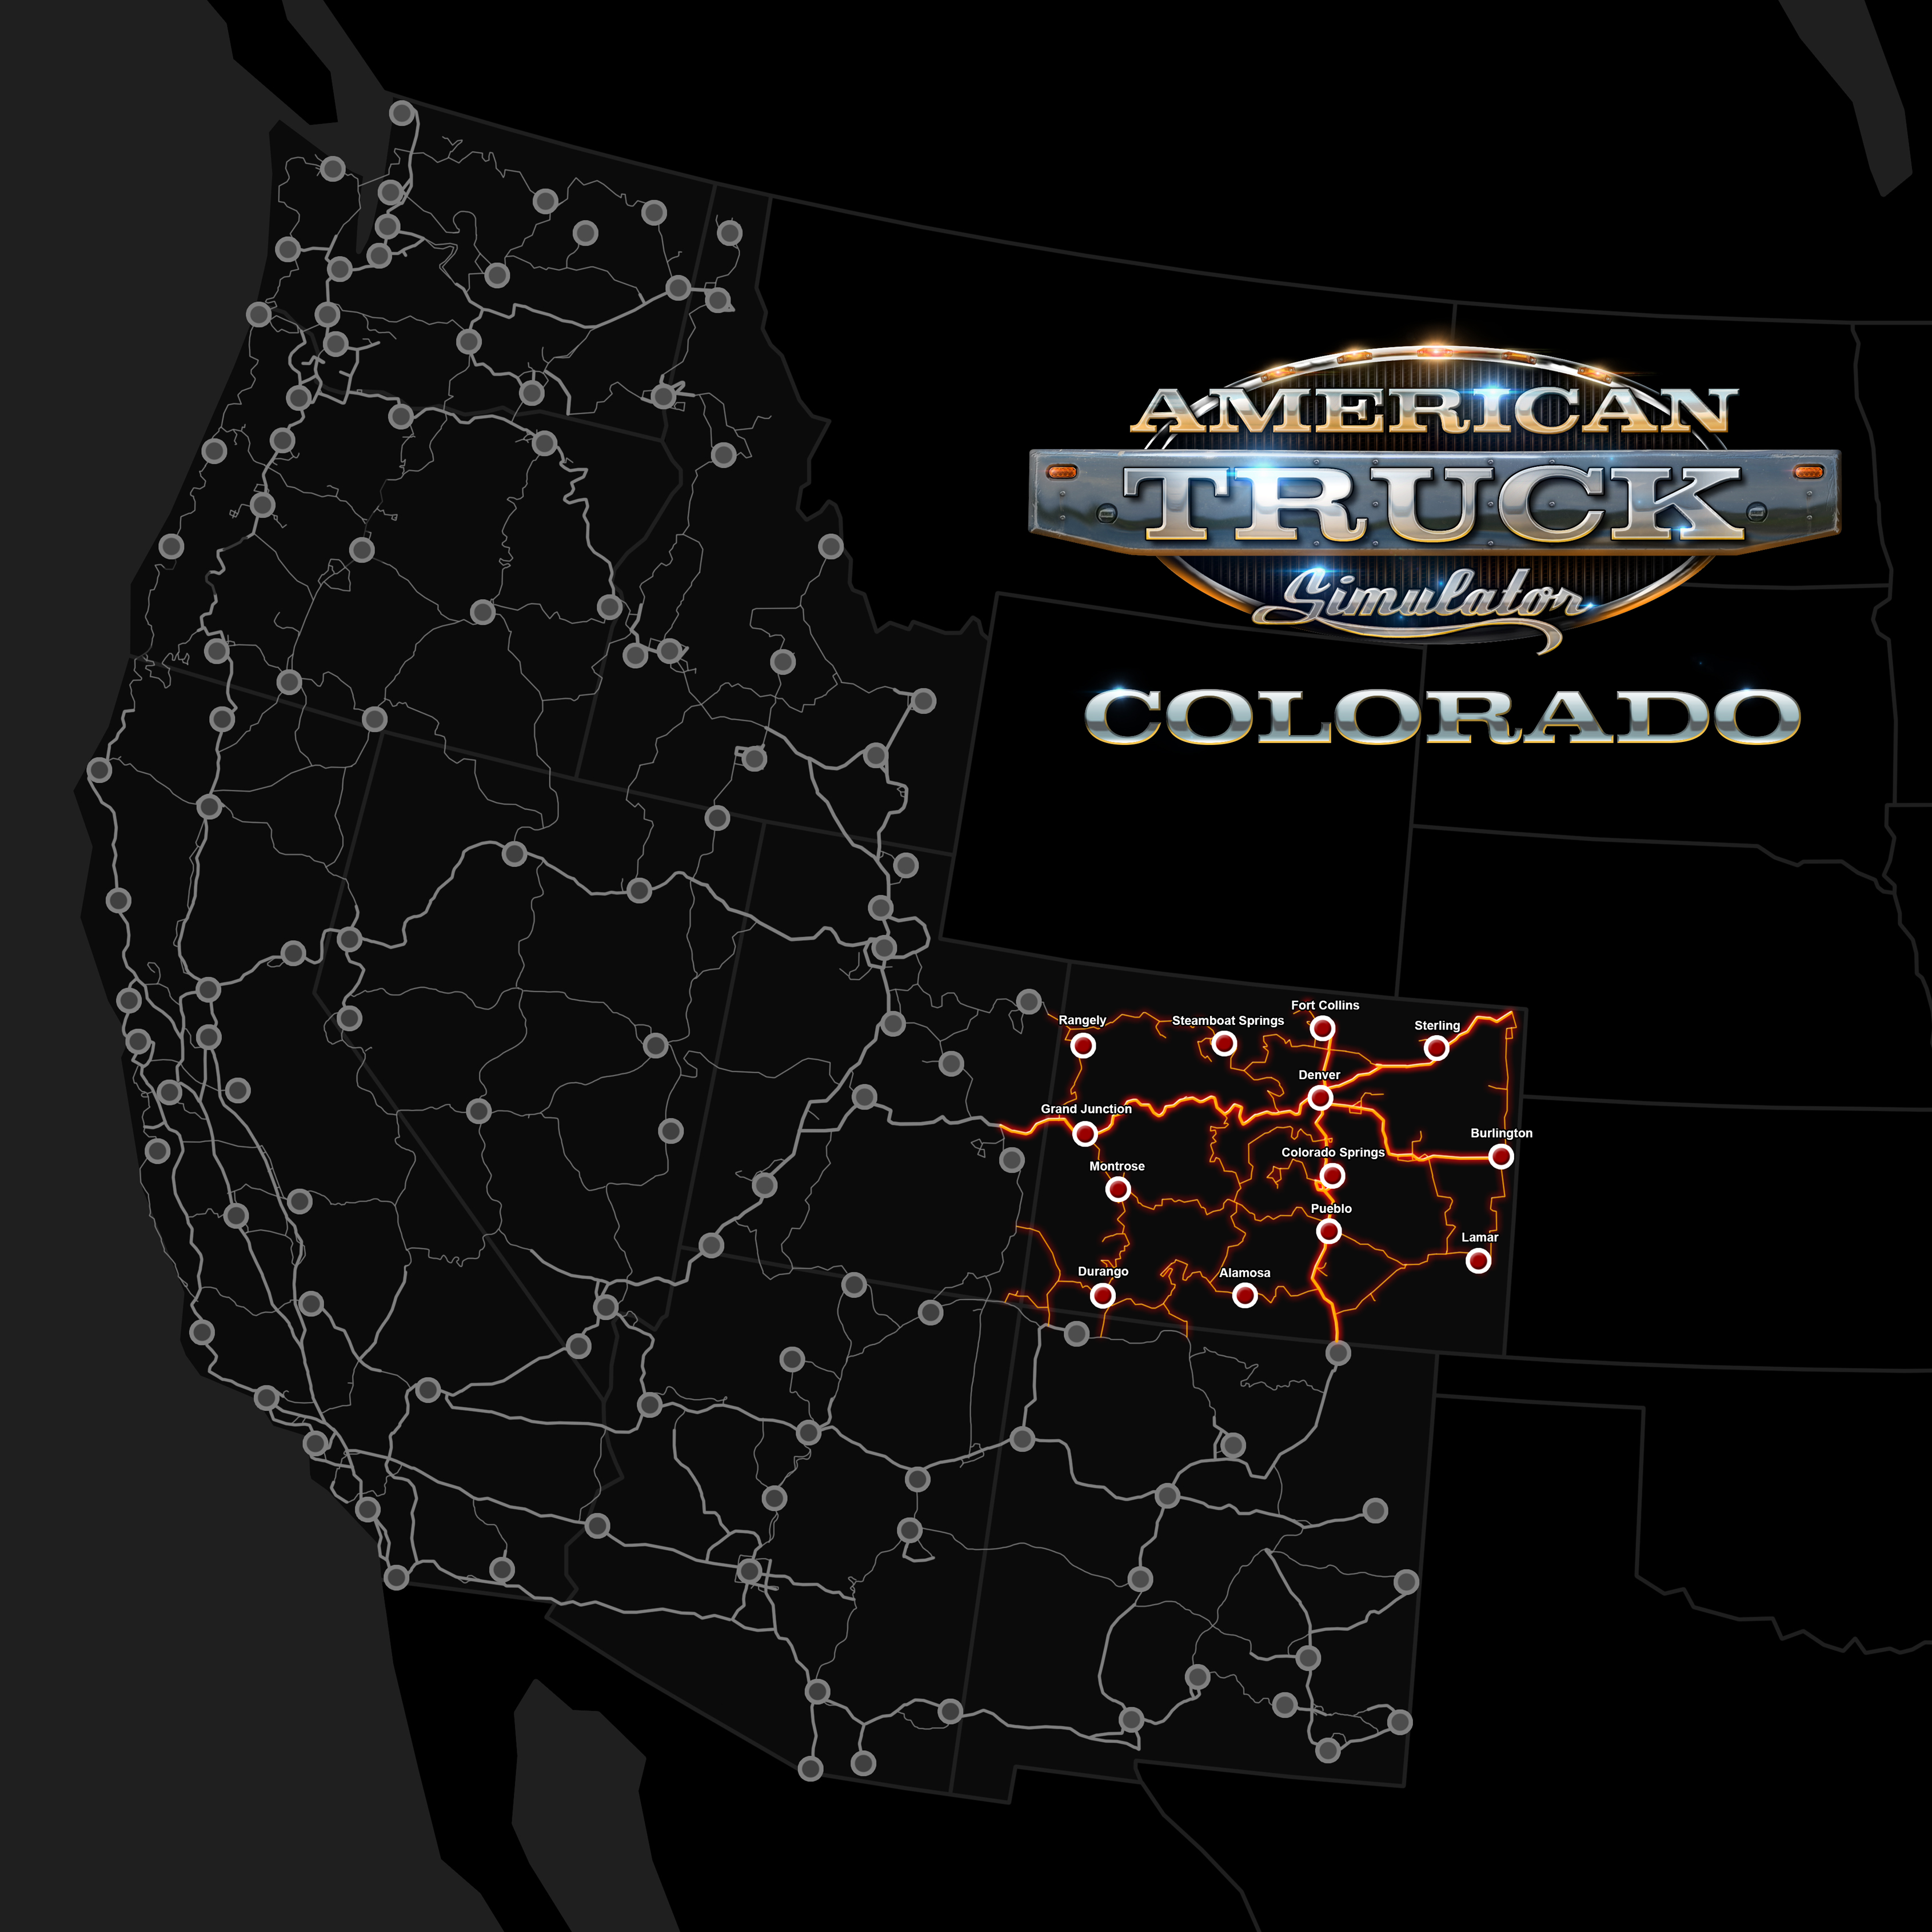 American truck карты. American Truck Simulator Colorado карта. American Truck Simulator - Texas карта. ATS карта DLC. American Truck Simulator Map with DLC.